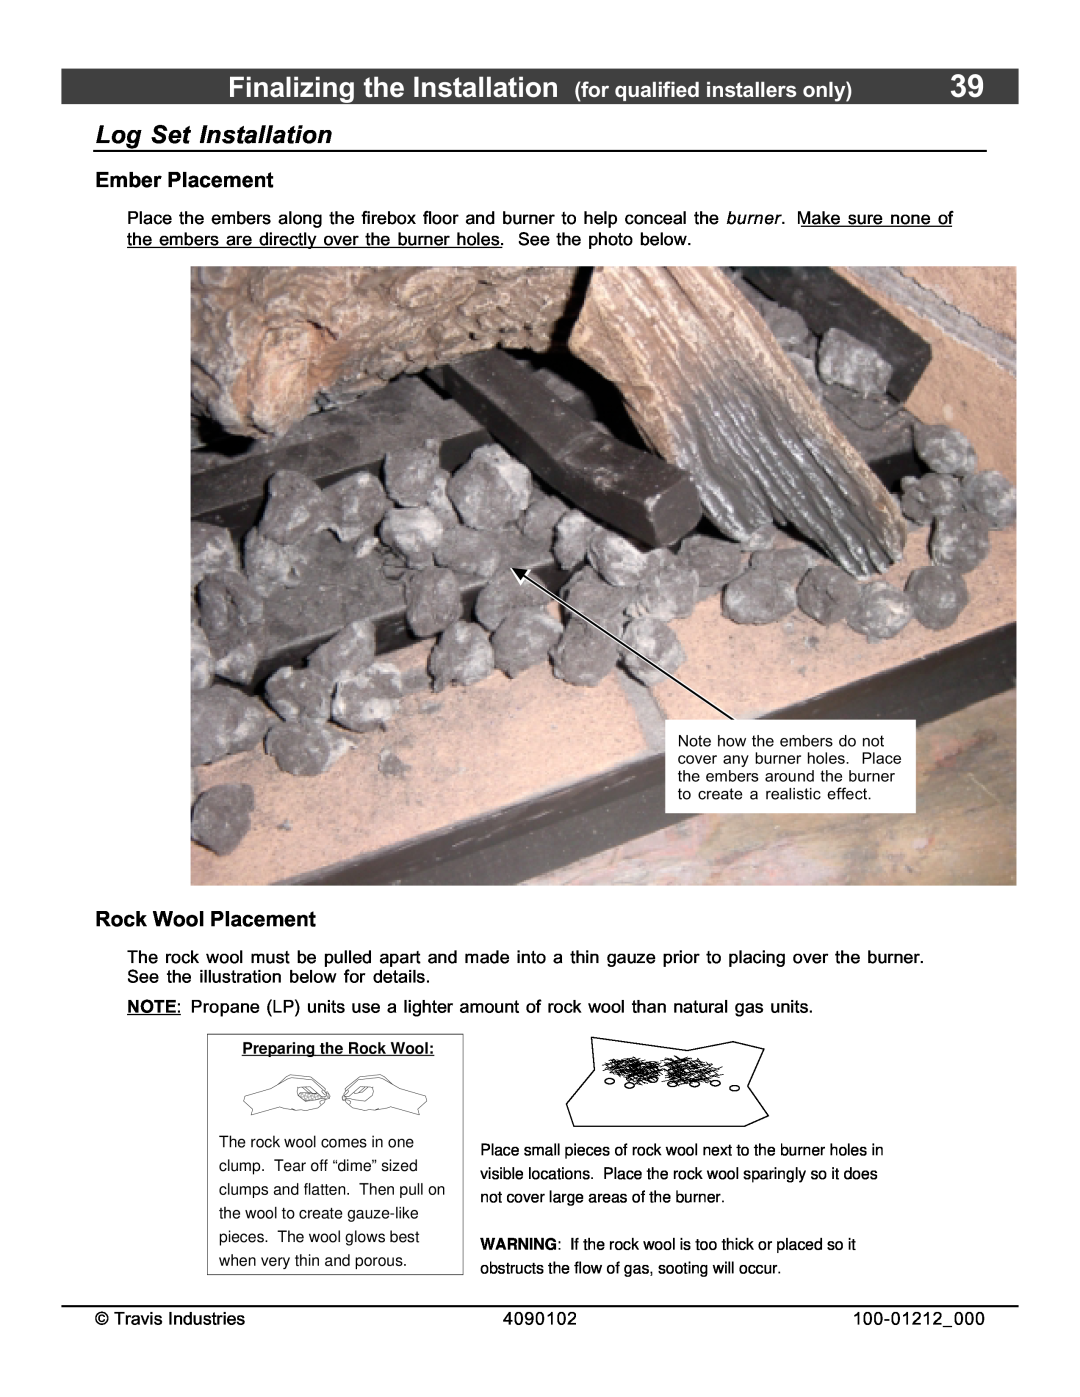 FireplaceXtrordinair 36CF installation manual Log Set Installation, Ember Placement, Rock Wool Placement 